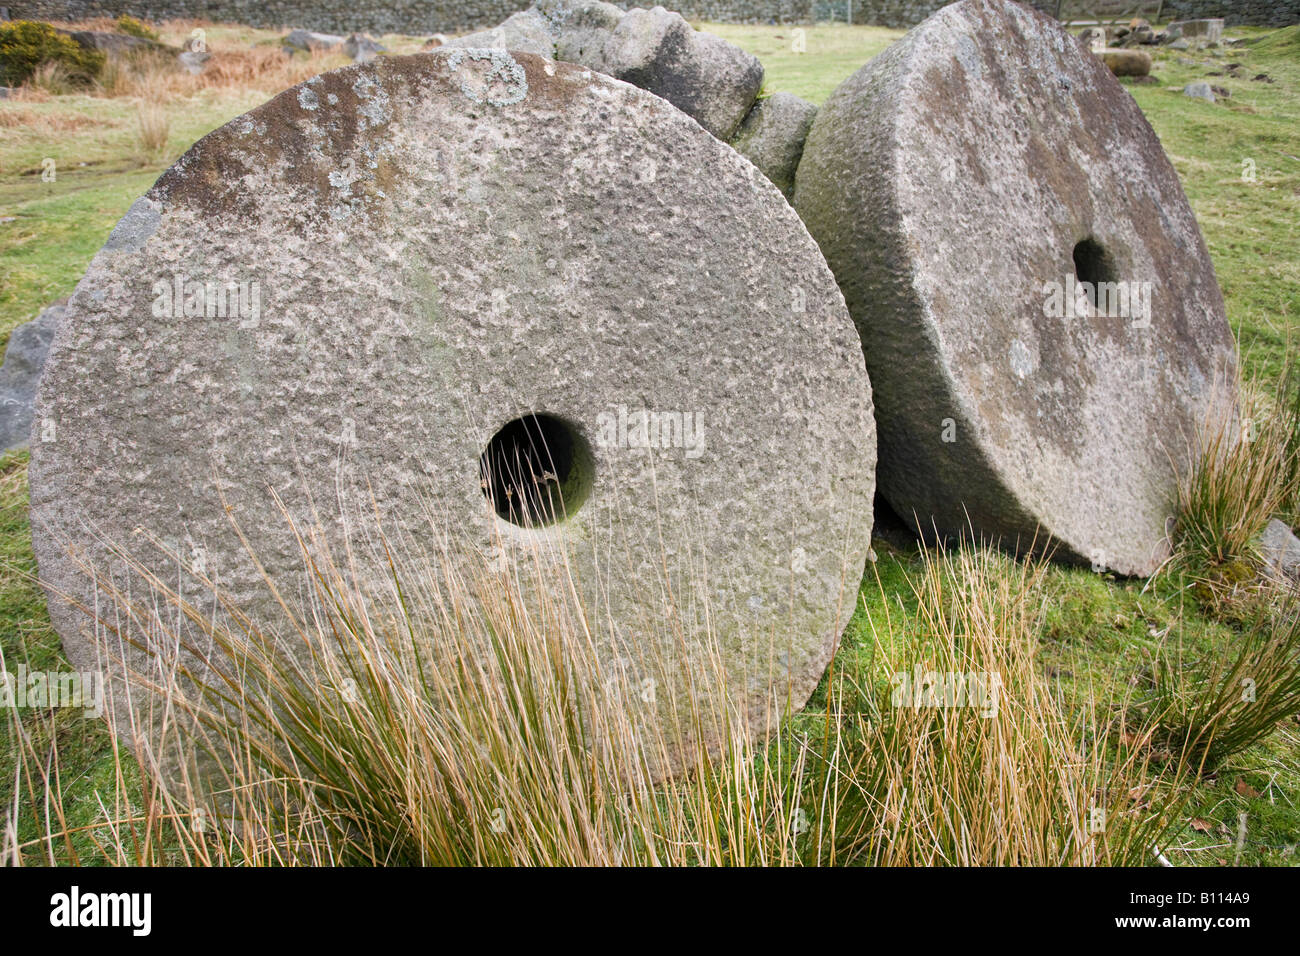 Carved millstones Hathersage Stock Photo